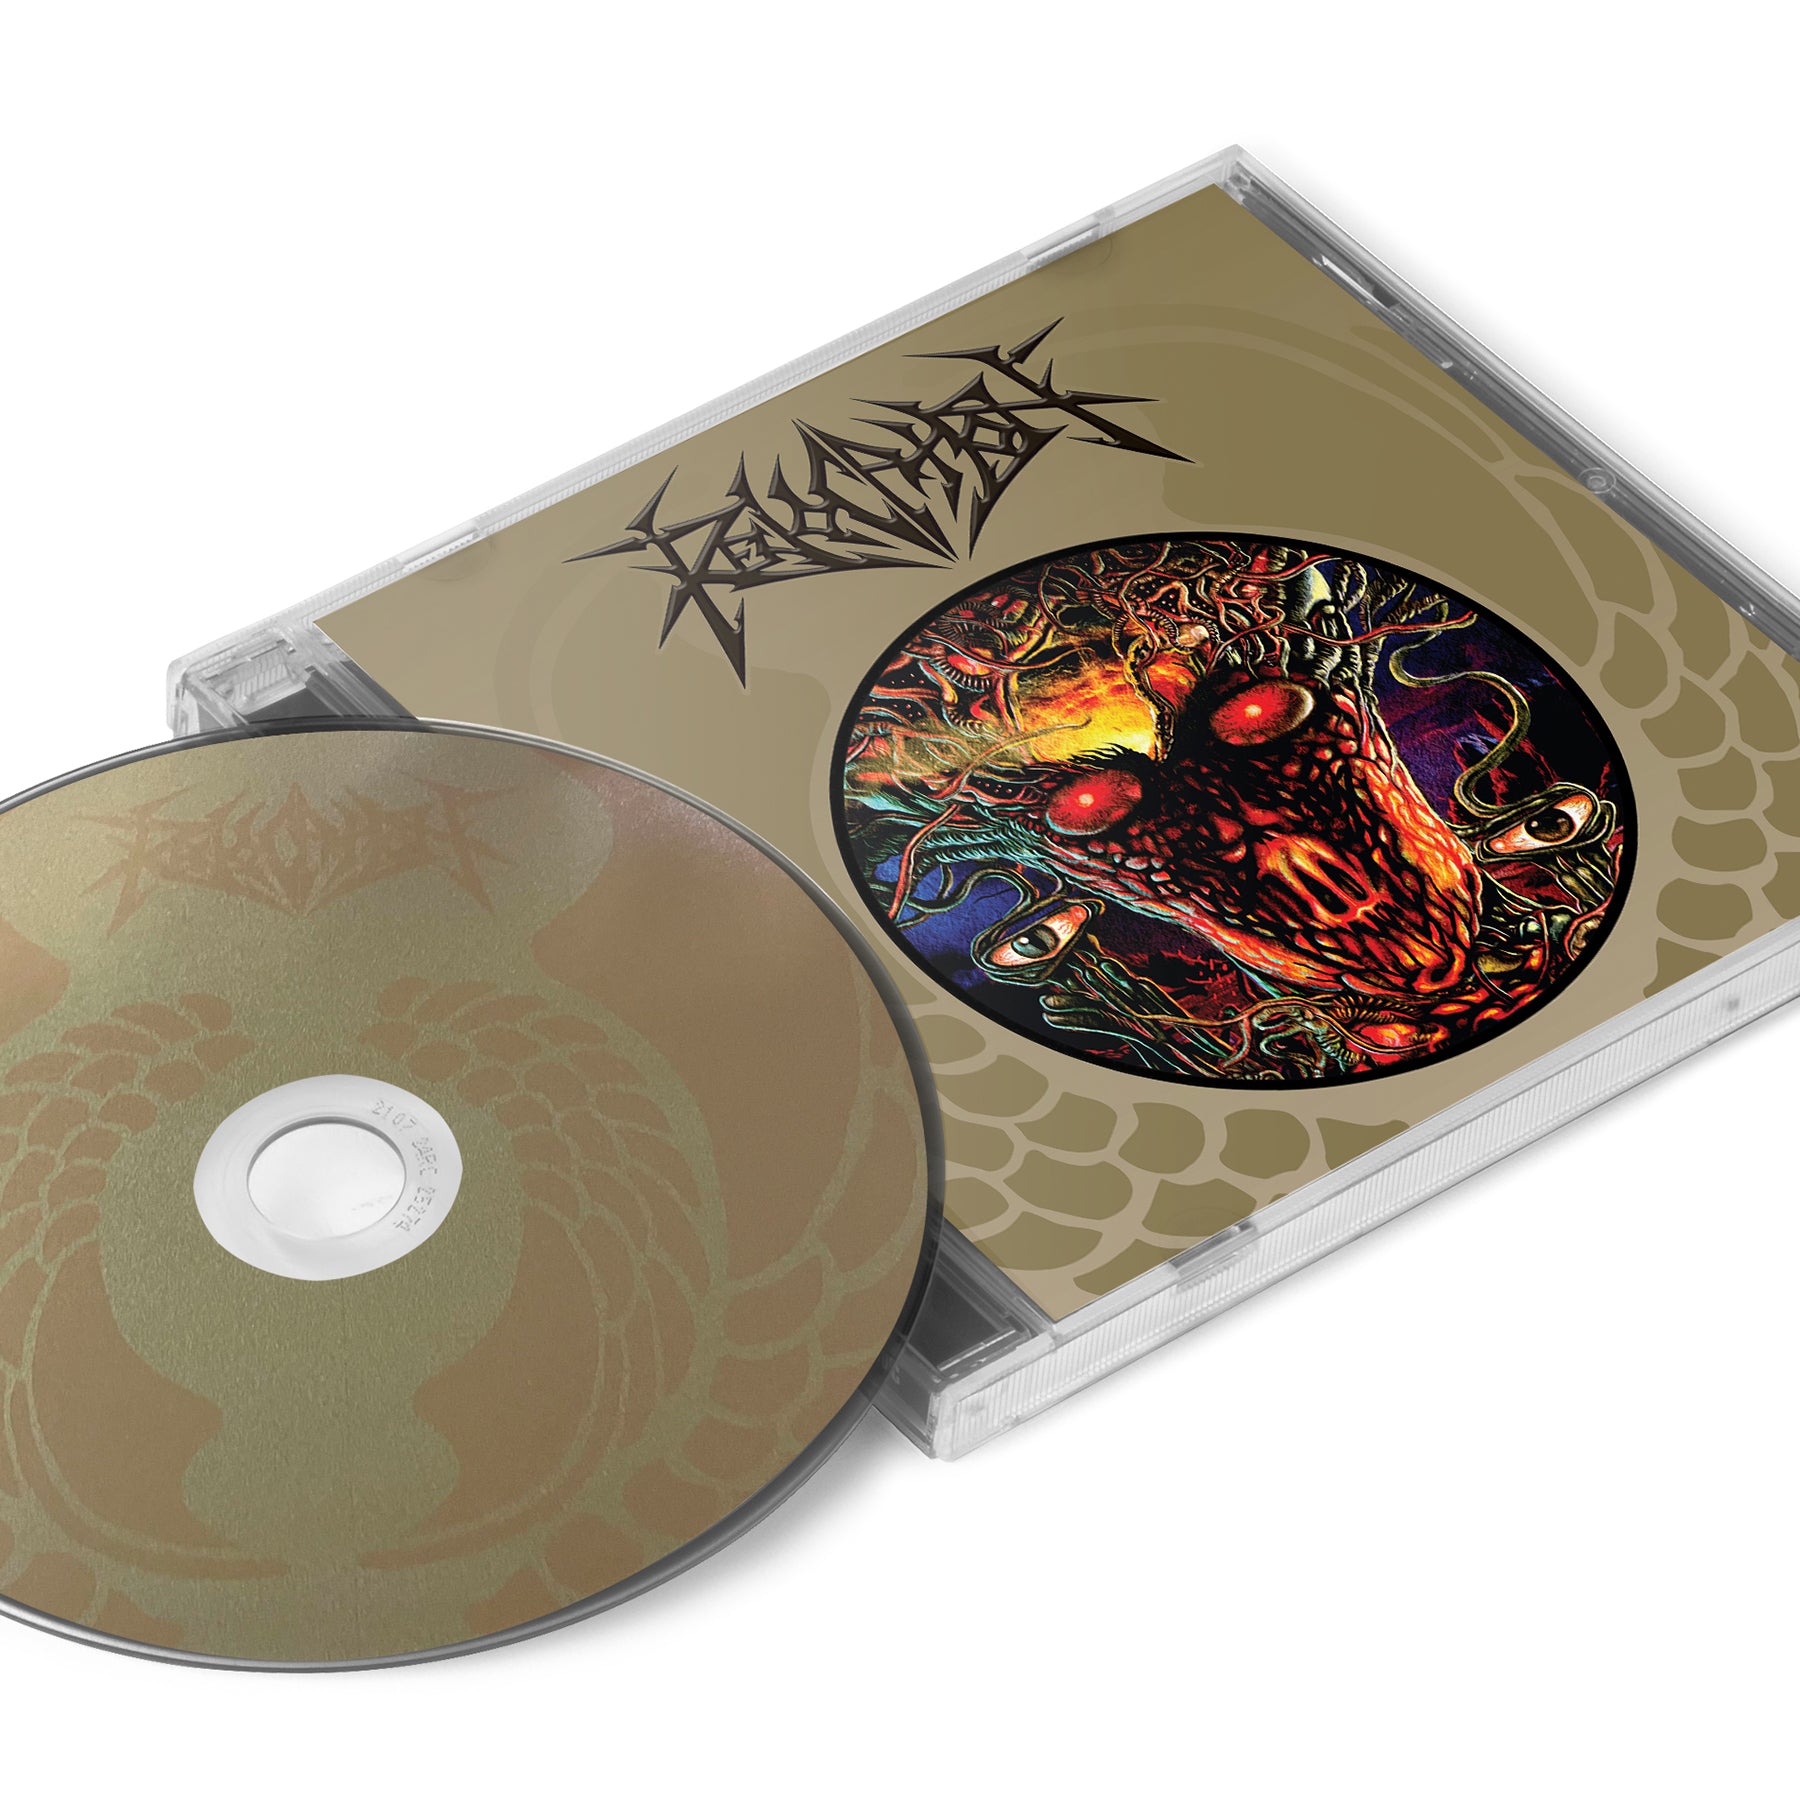 Revocation "Revocation" CD